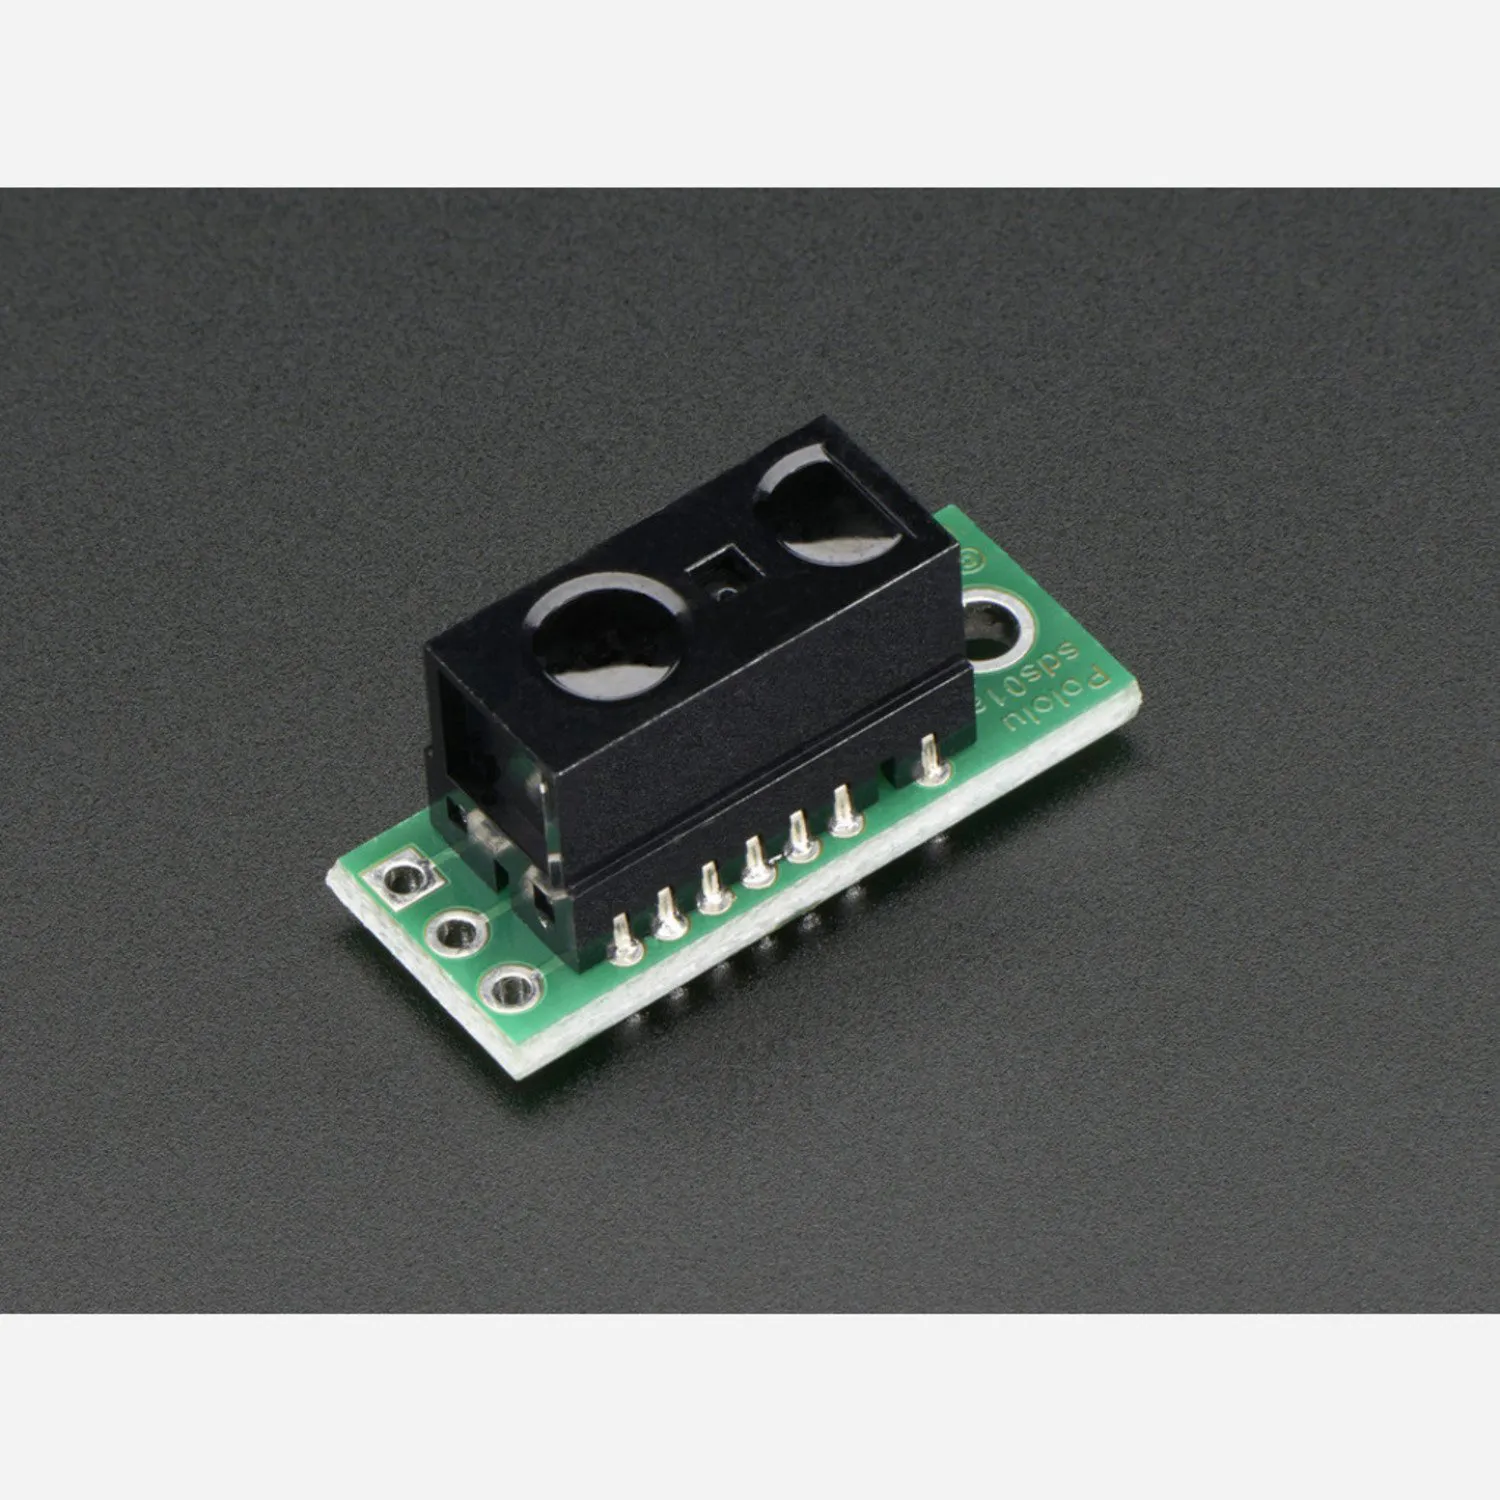 Photo of Sharp GP2Y0D810Z0F Digital Distance Sensor with Pololu Carrier [GP2Y0D810Z0F]